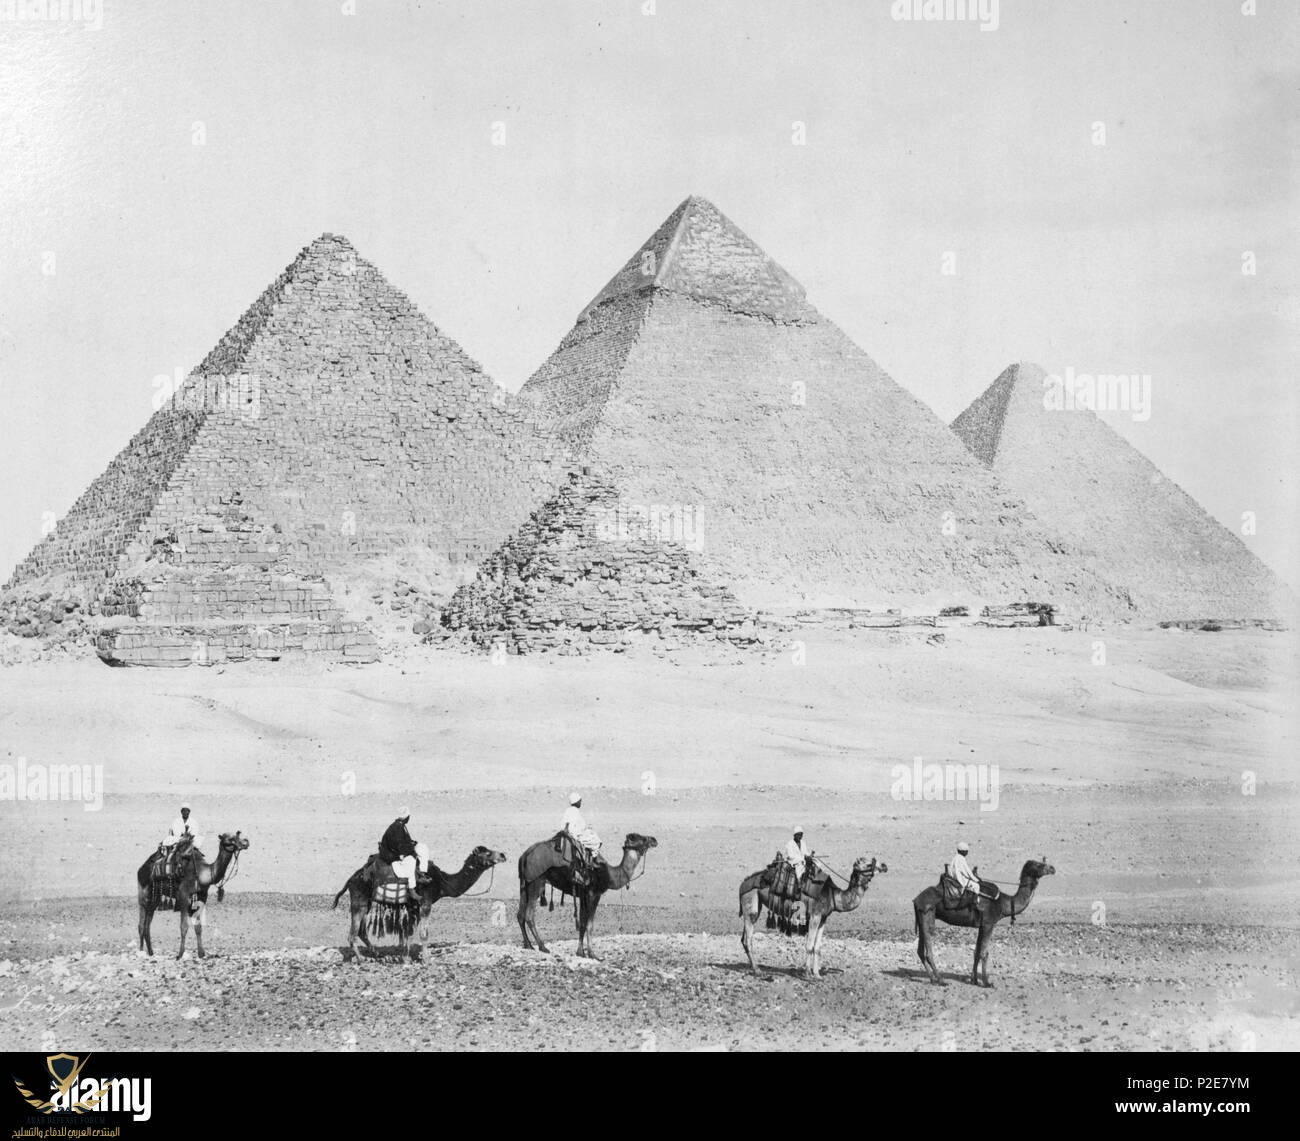 historic-photograph-of-the-pyramids-egyptian-pyramids-of-the-giza-necropolis-egypt-P2E7YM.jpg